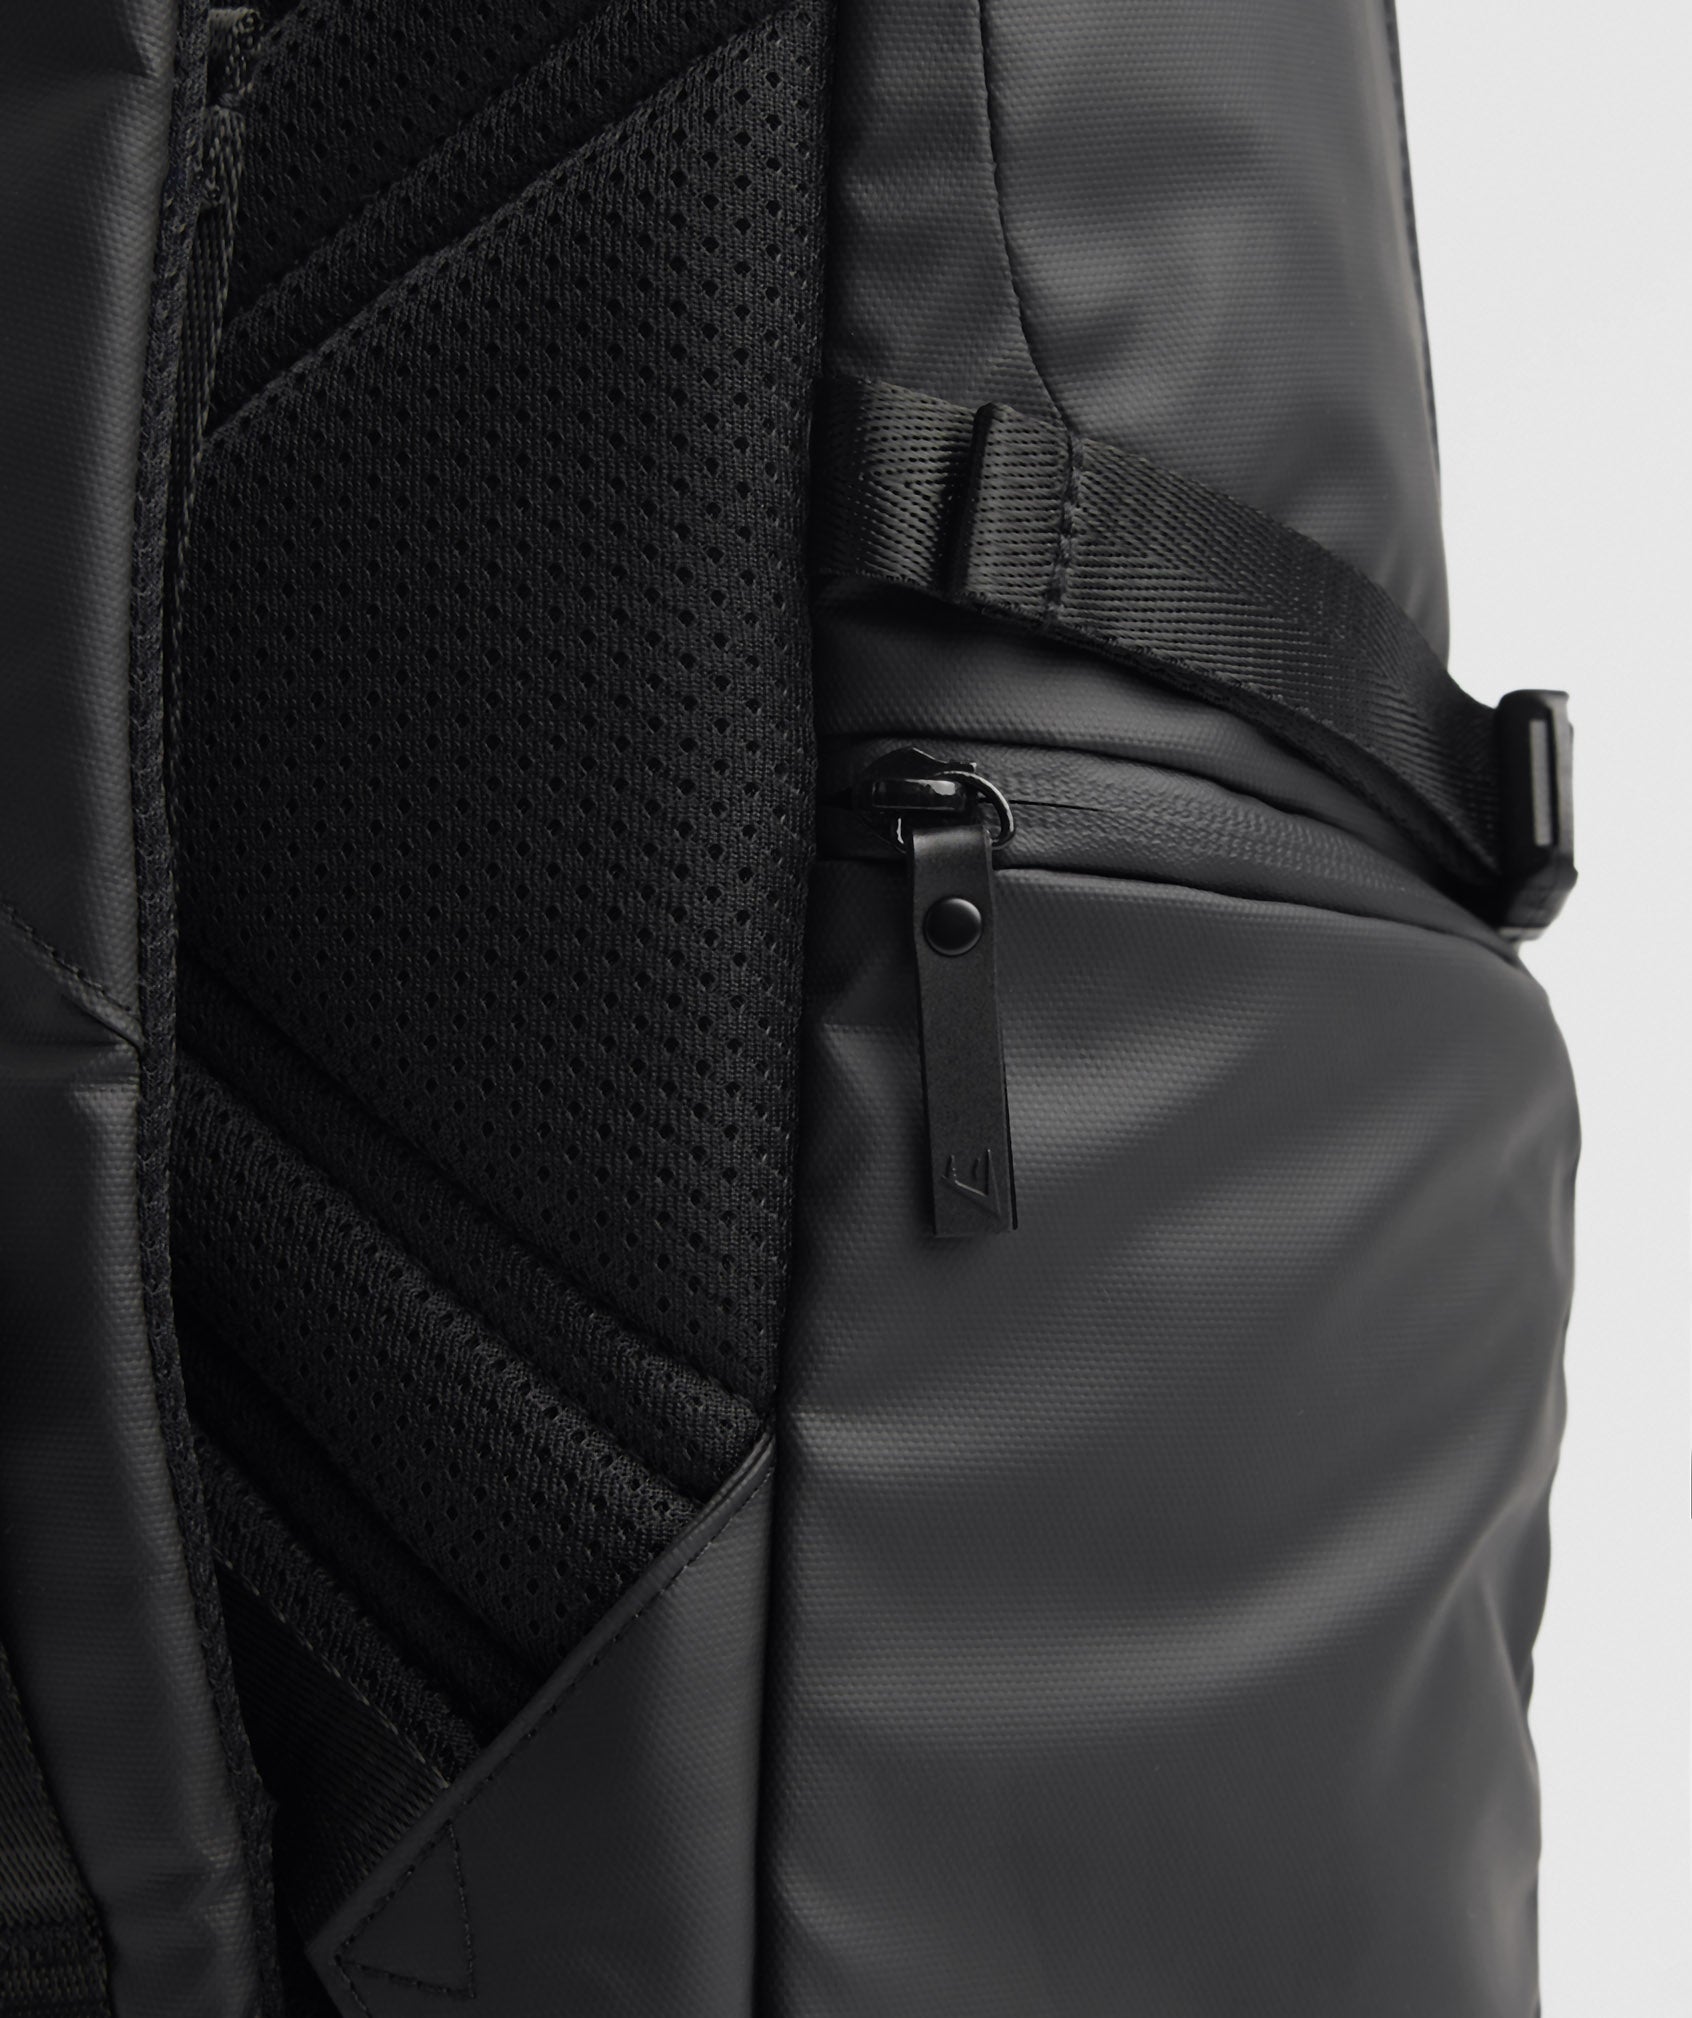 X-Series 0.3 Backpack in Black - view 7